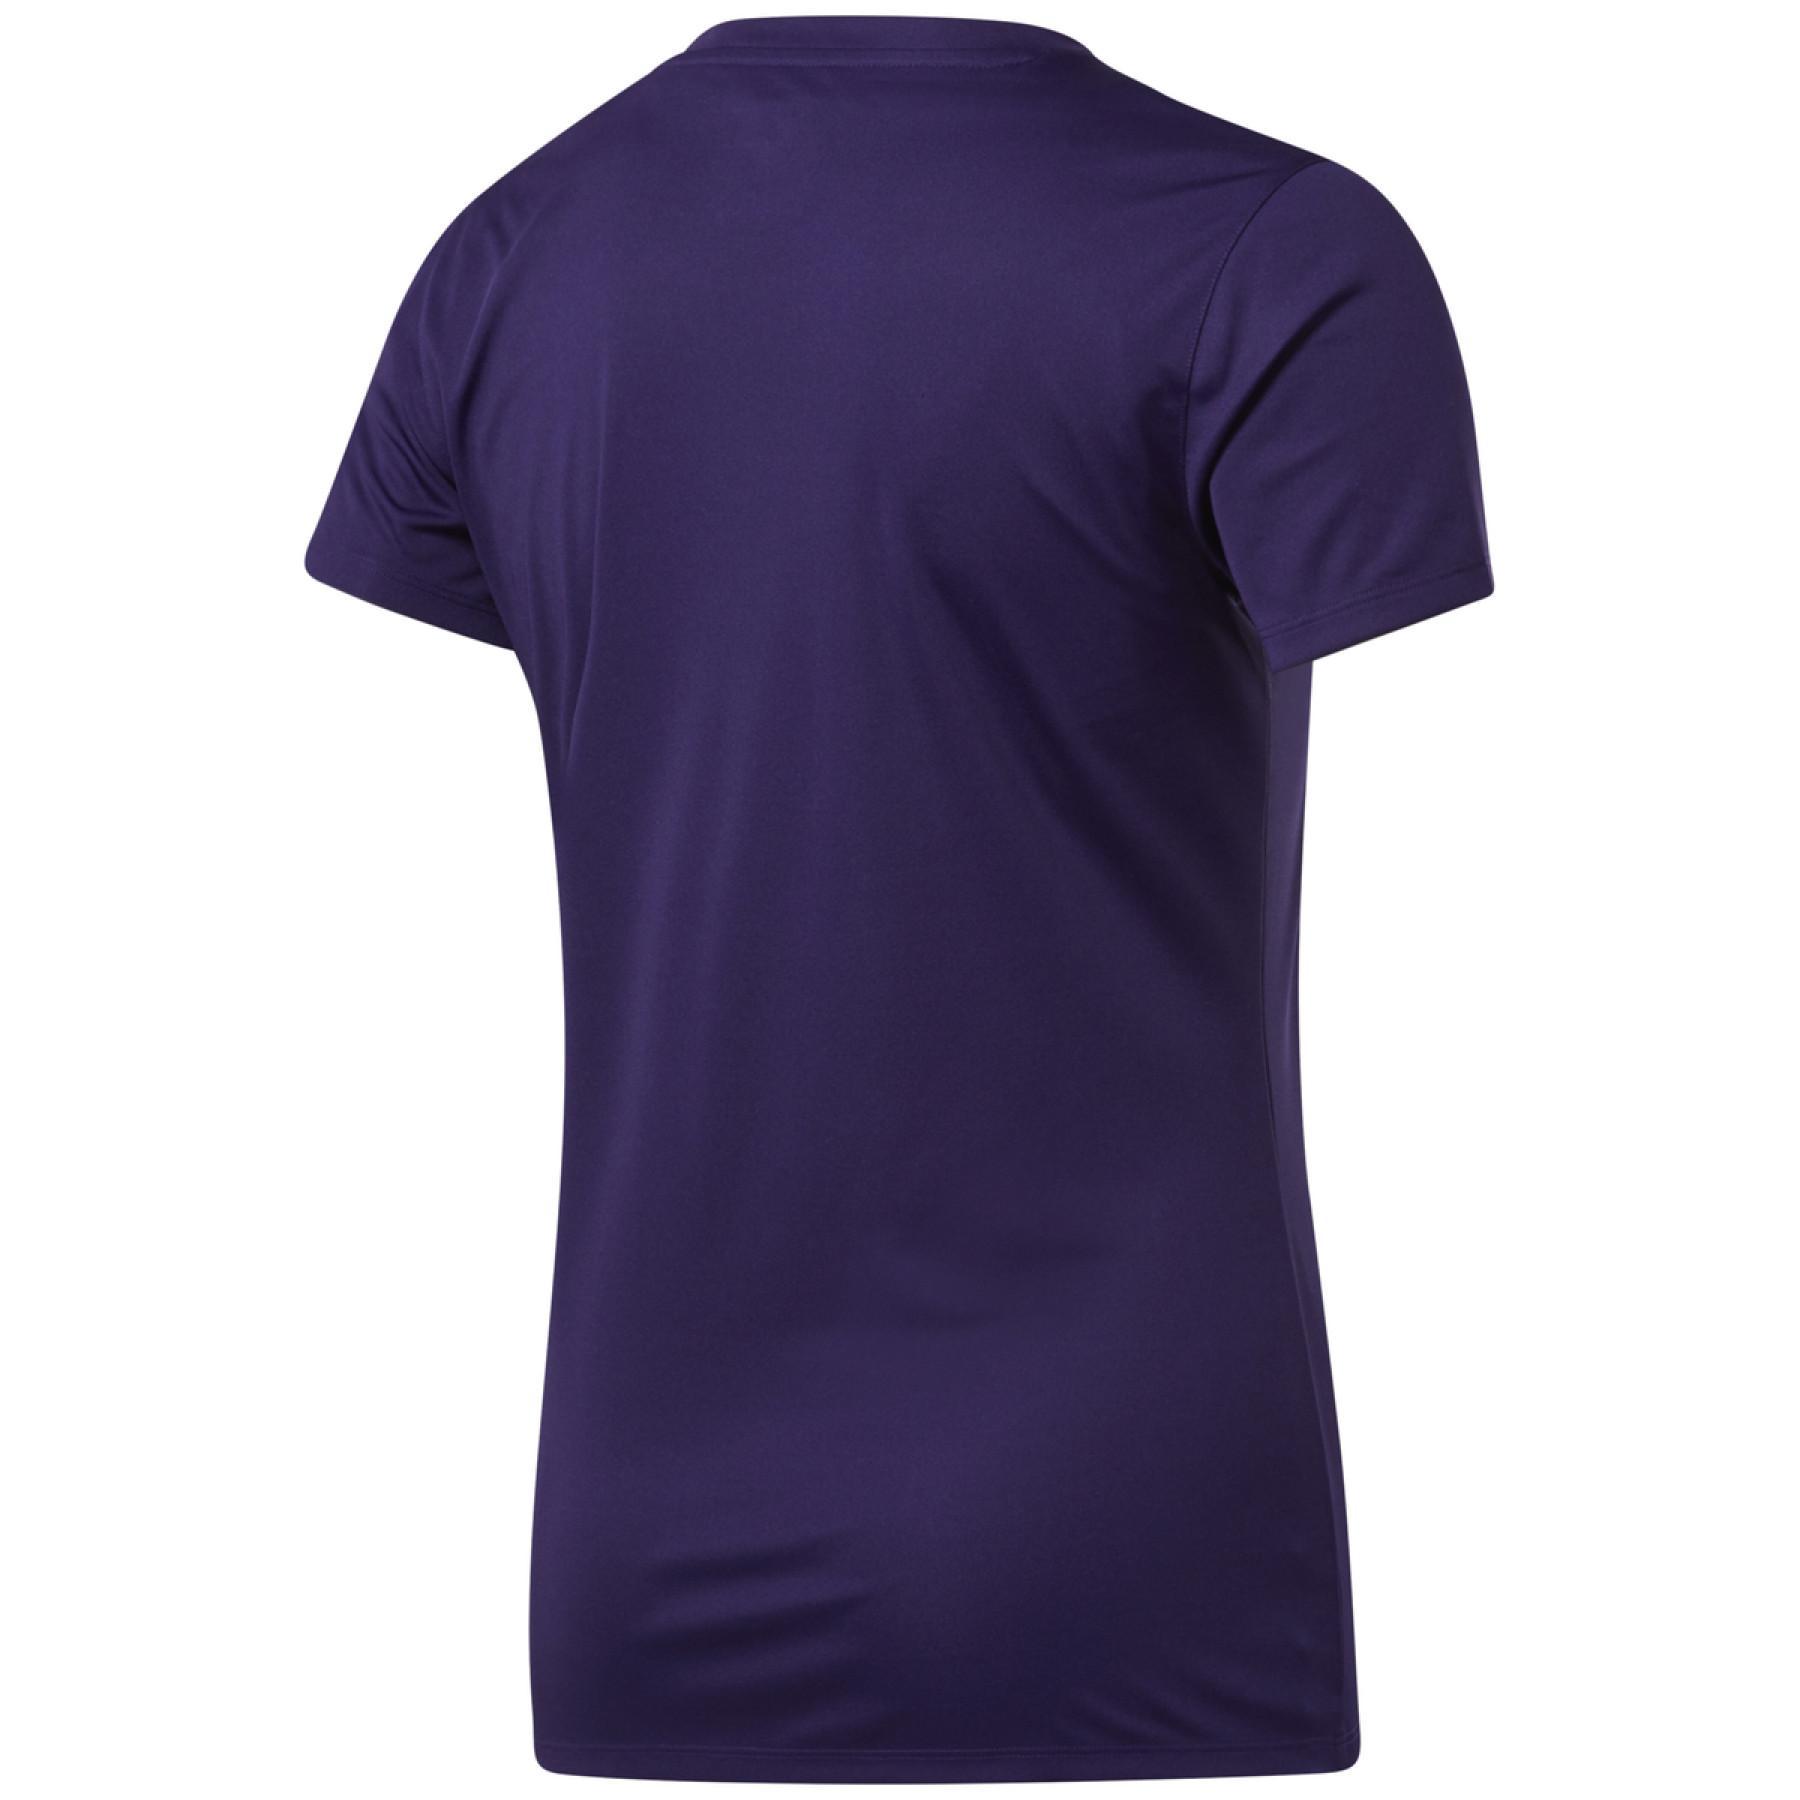 Camiseta de mujer Reebok Running Windsprint